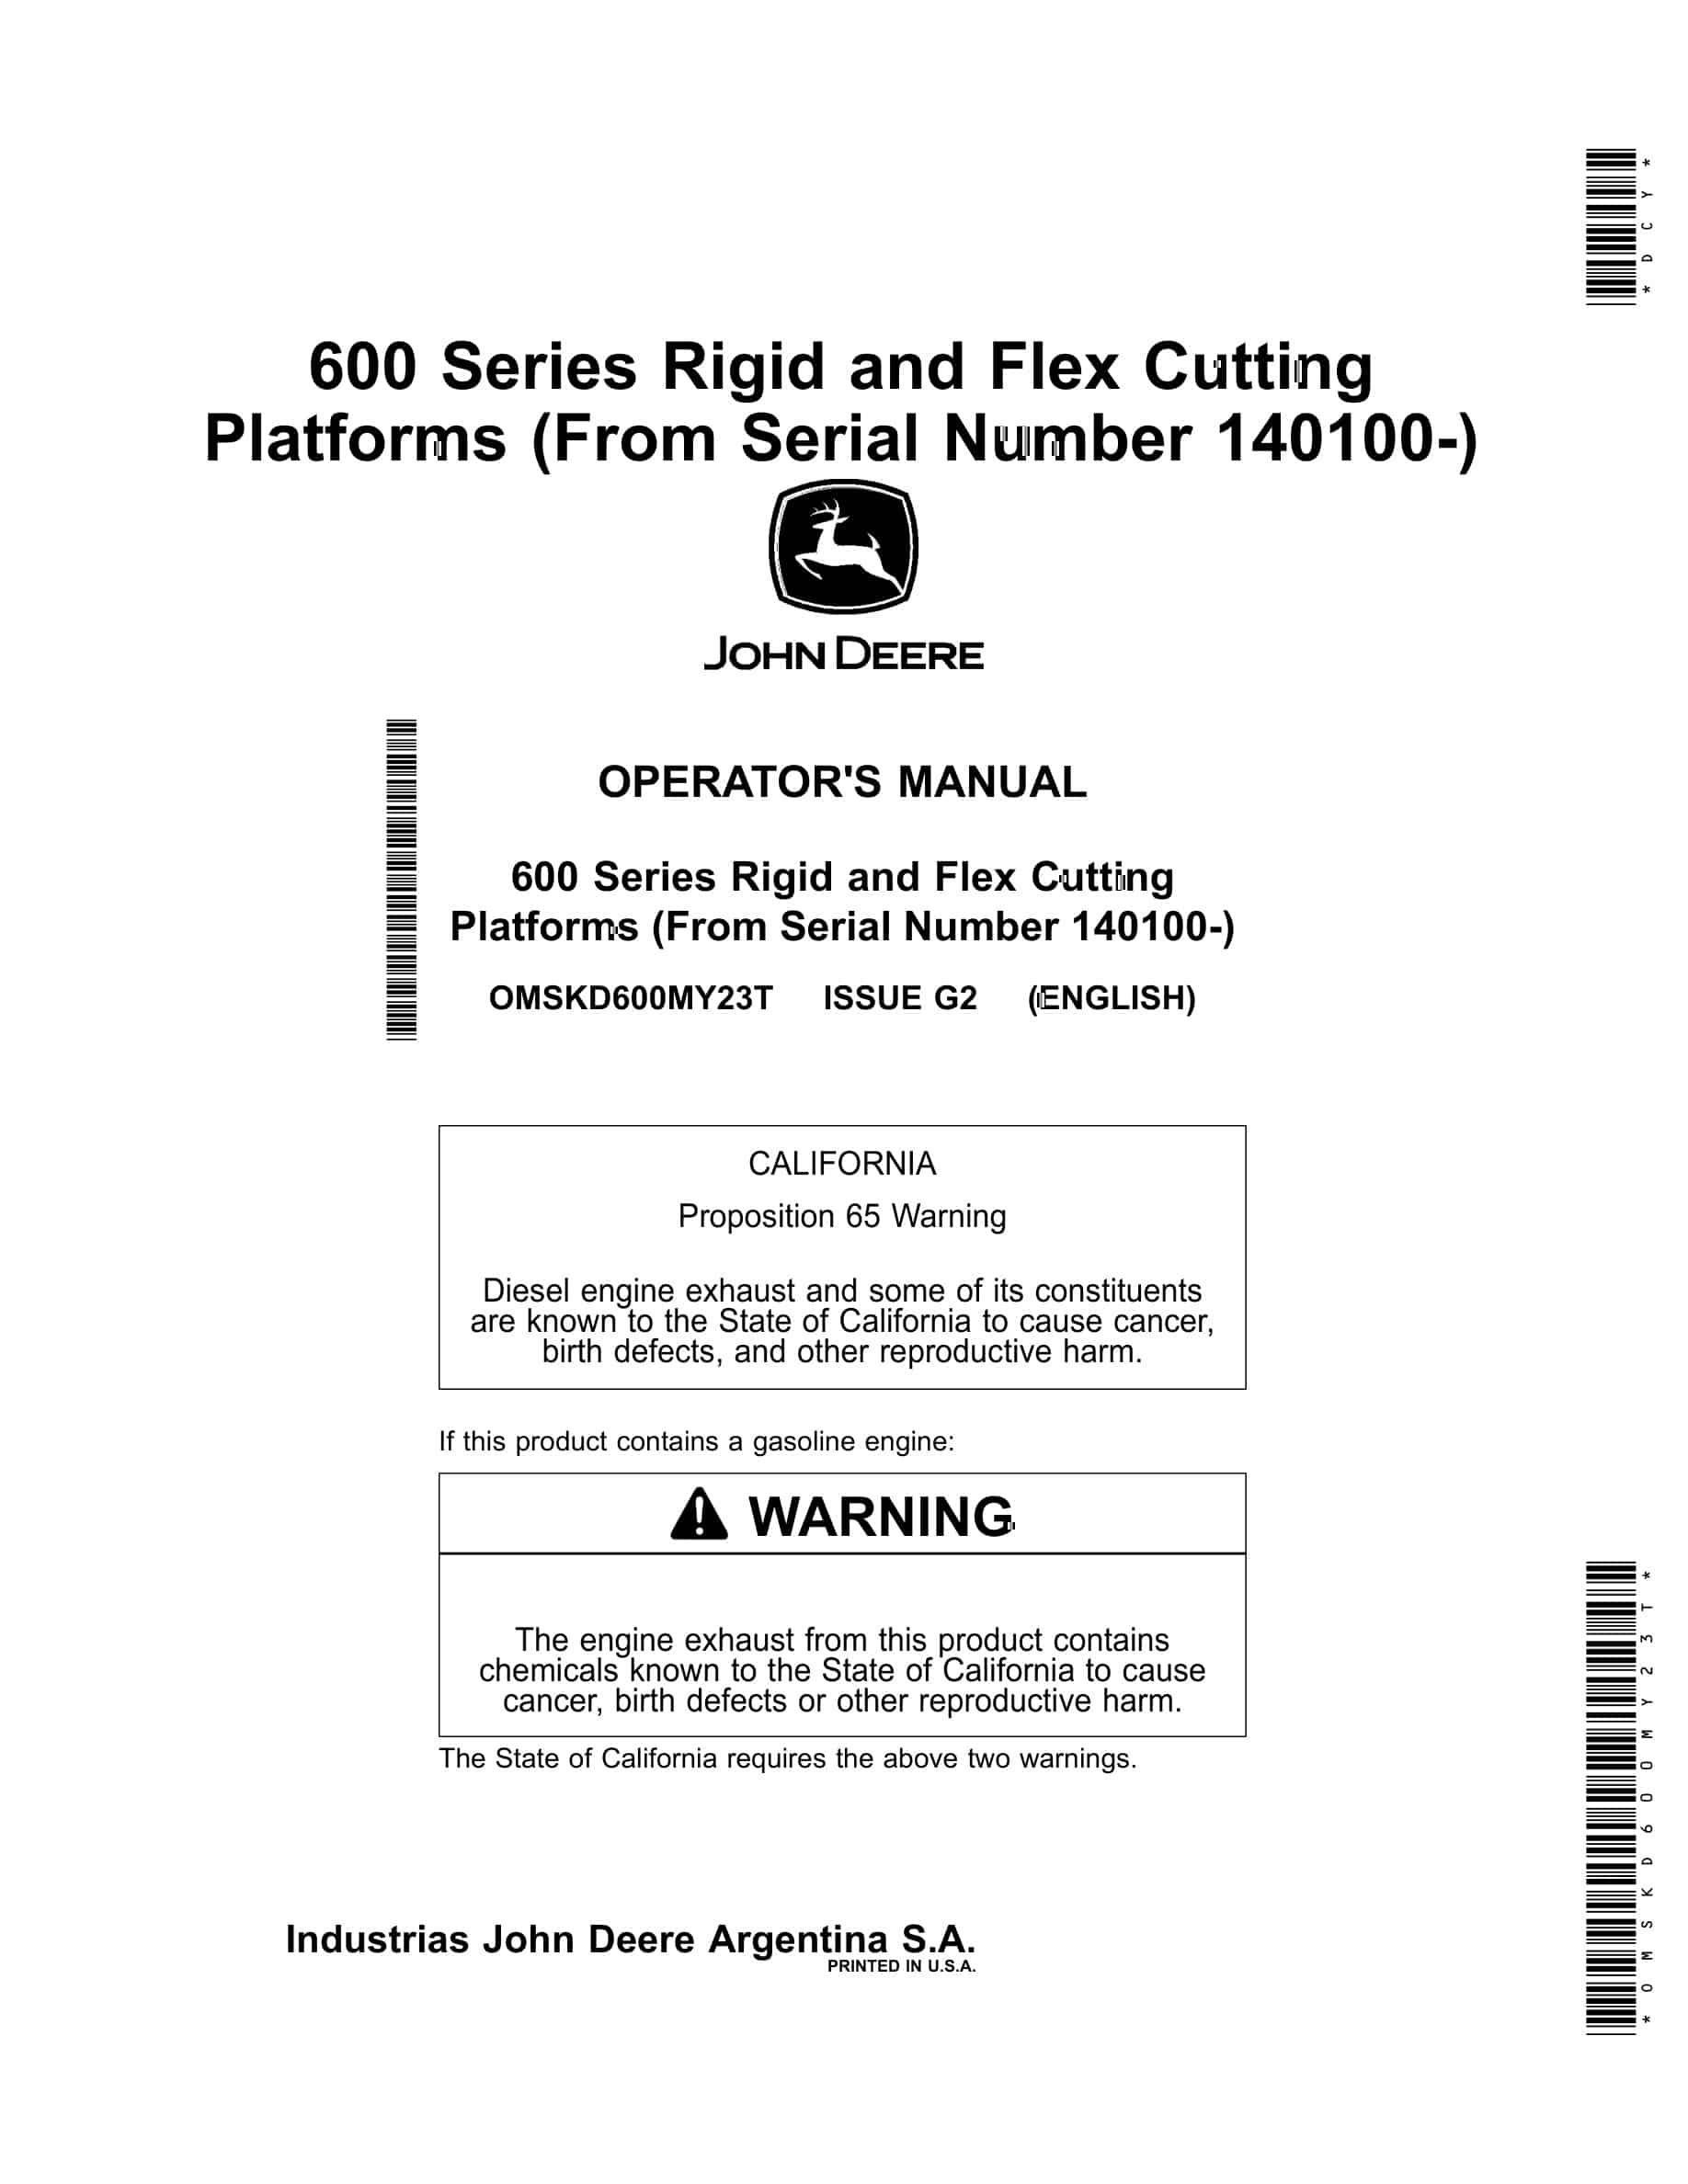 John Deere 600 Series Rigid and Flex Cutting Platforms Operator Manual OMSKD600MY23T-1